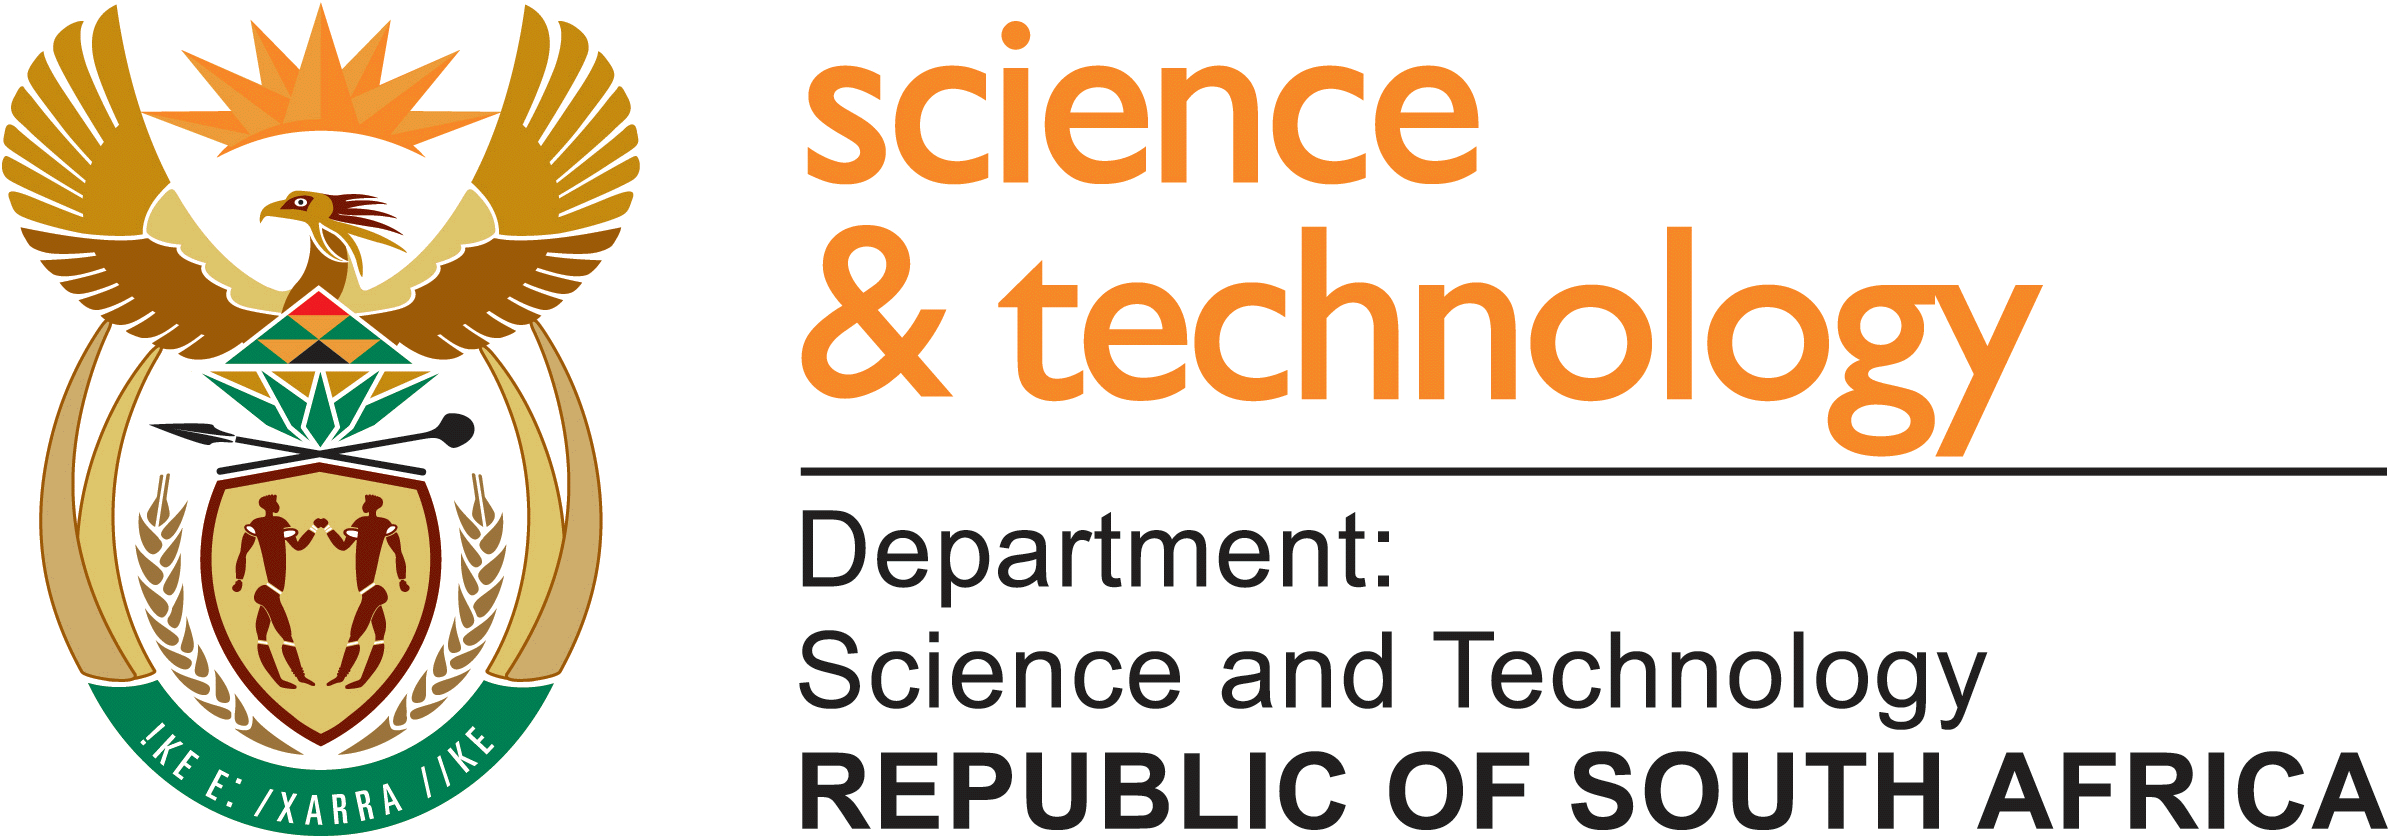 The Department Logo - Logo Library